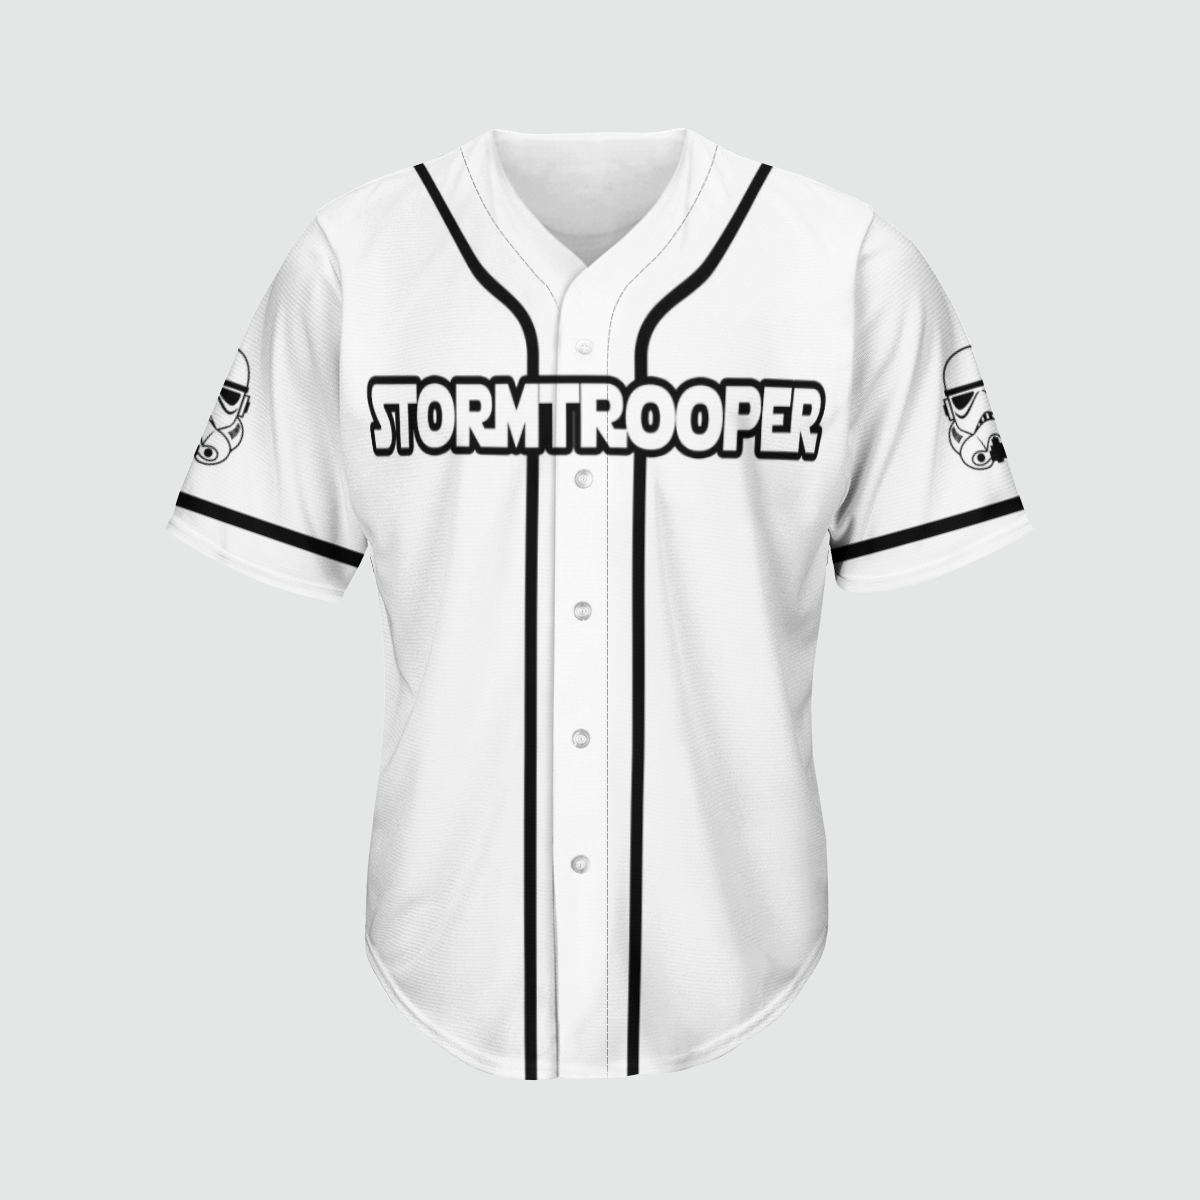 Stormtrooper Star Wars baseball shirt